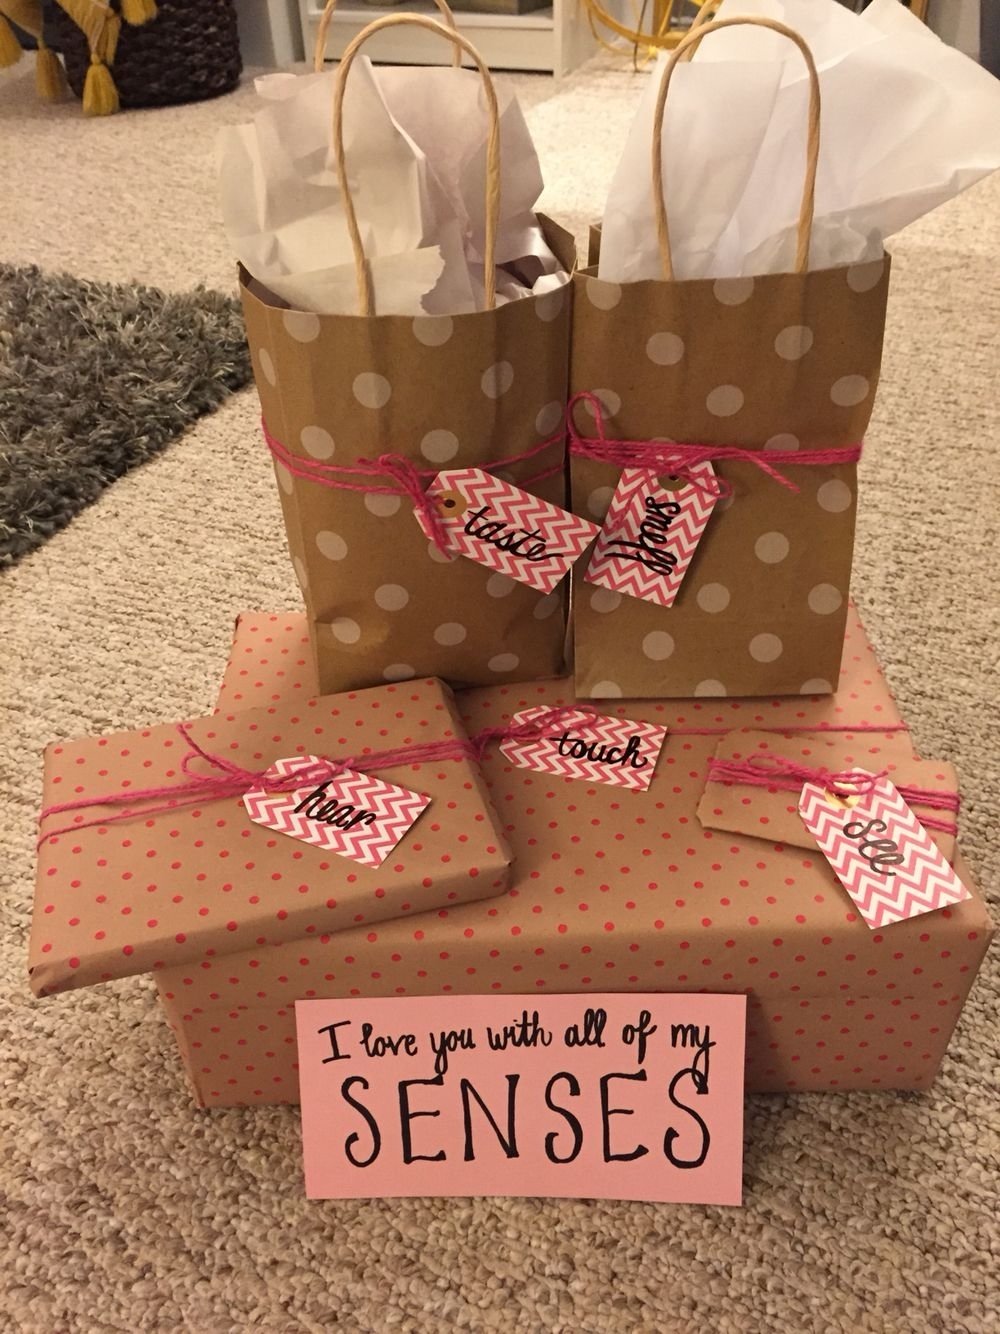 10 Lovable Romantic Birthday Gift Ideas Boyfriend 5 senses valentines day gift stuff for cody pinterest gift 2022